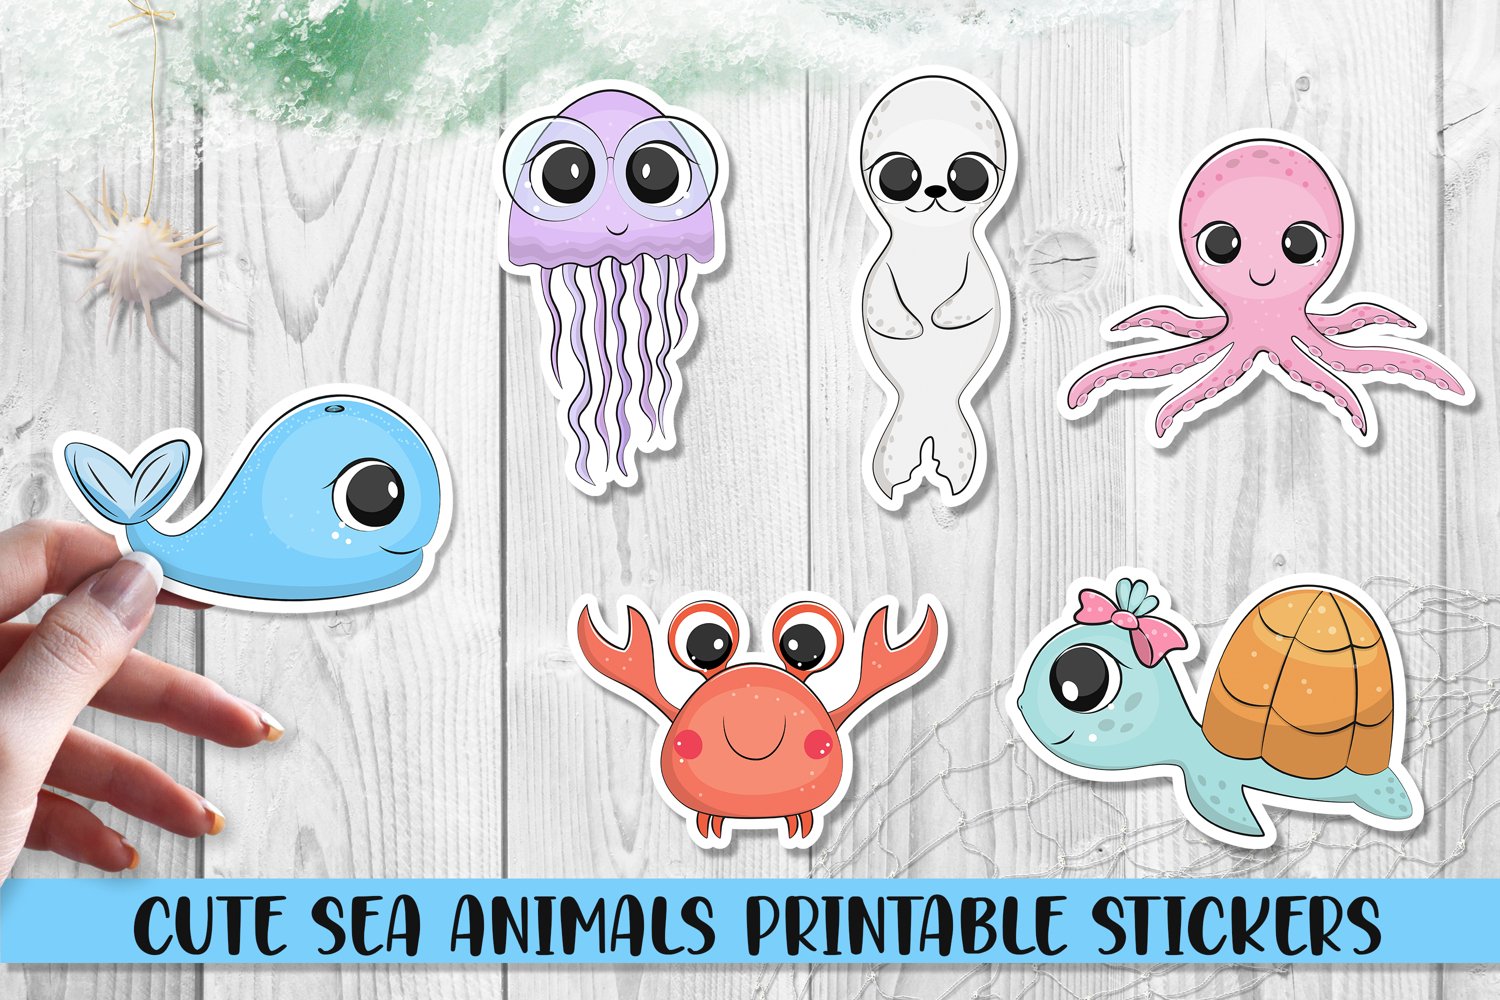 Cute sea animals printable stickers.